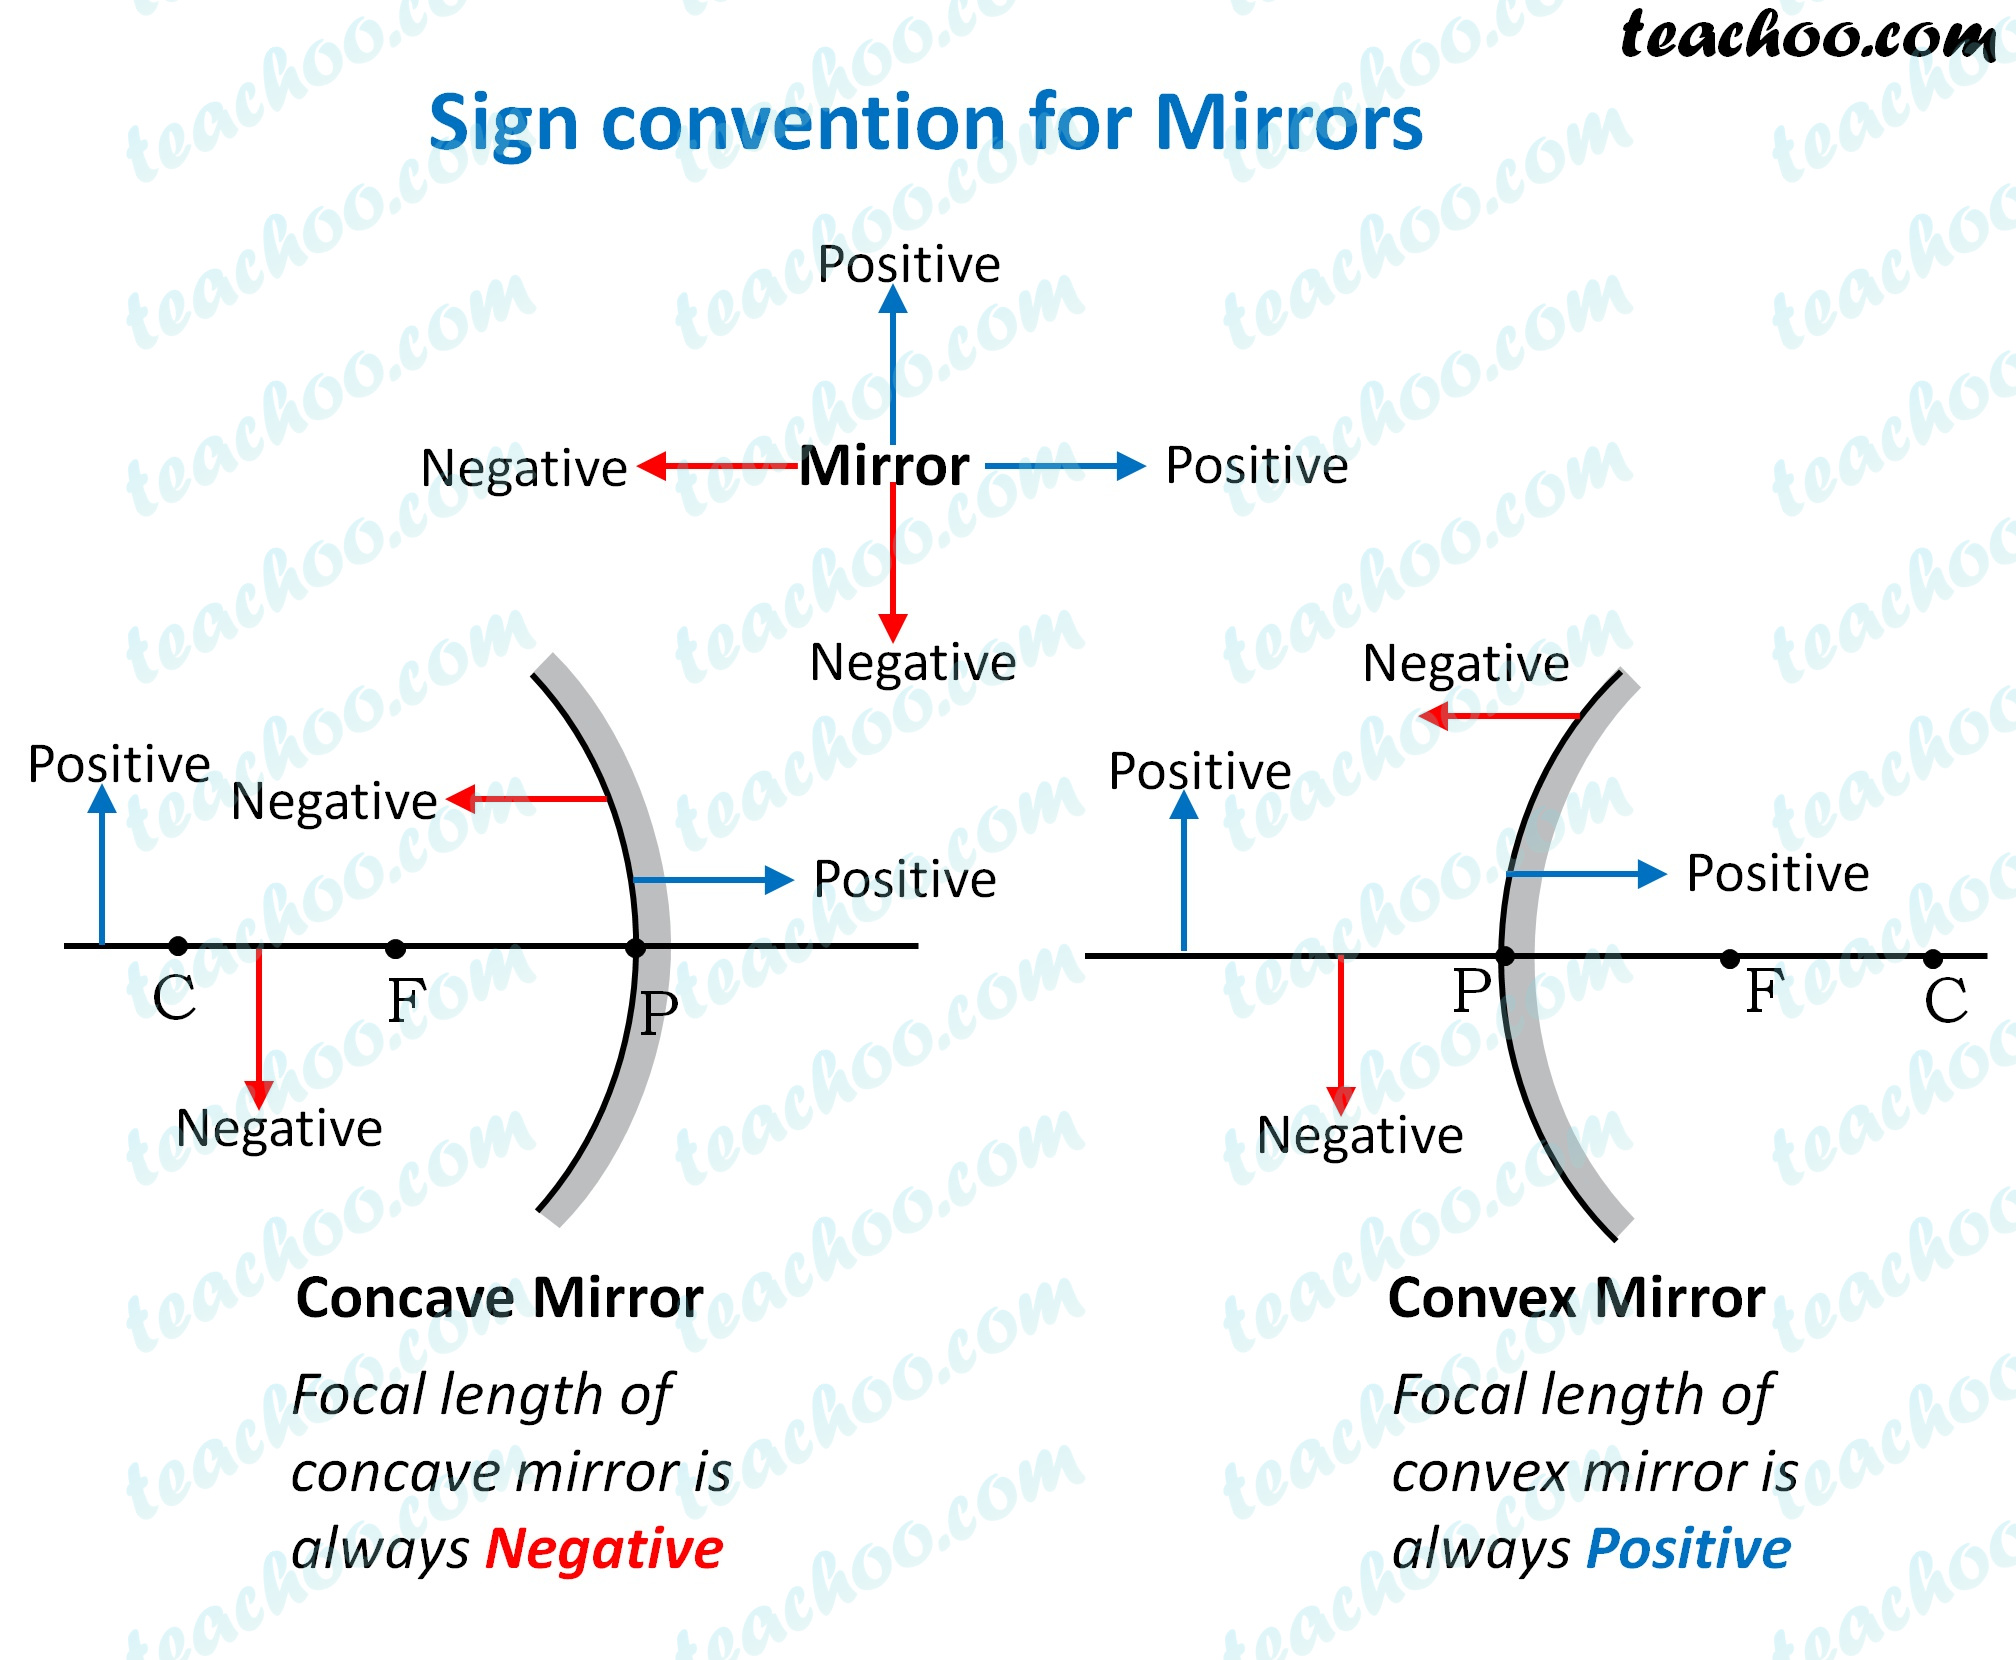 sign-convention-for-mirrors---teachoo.jpg